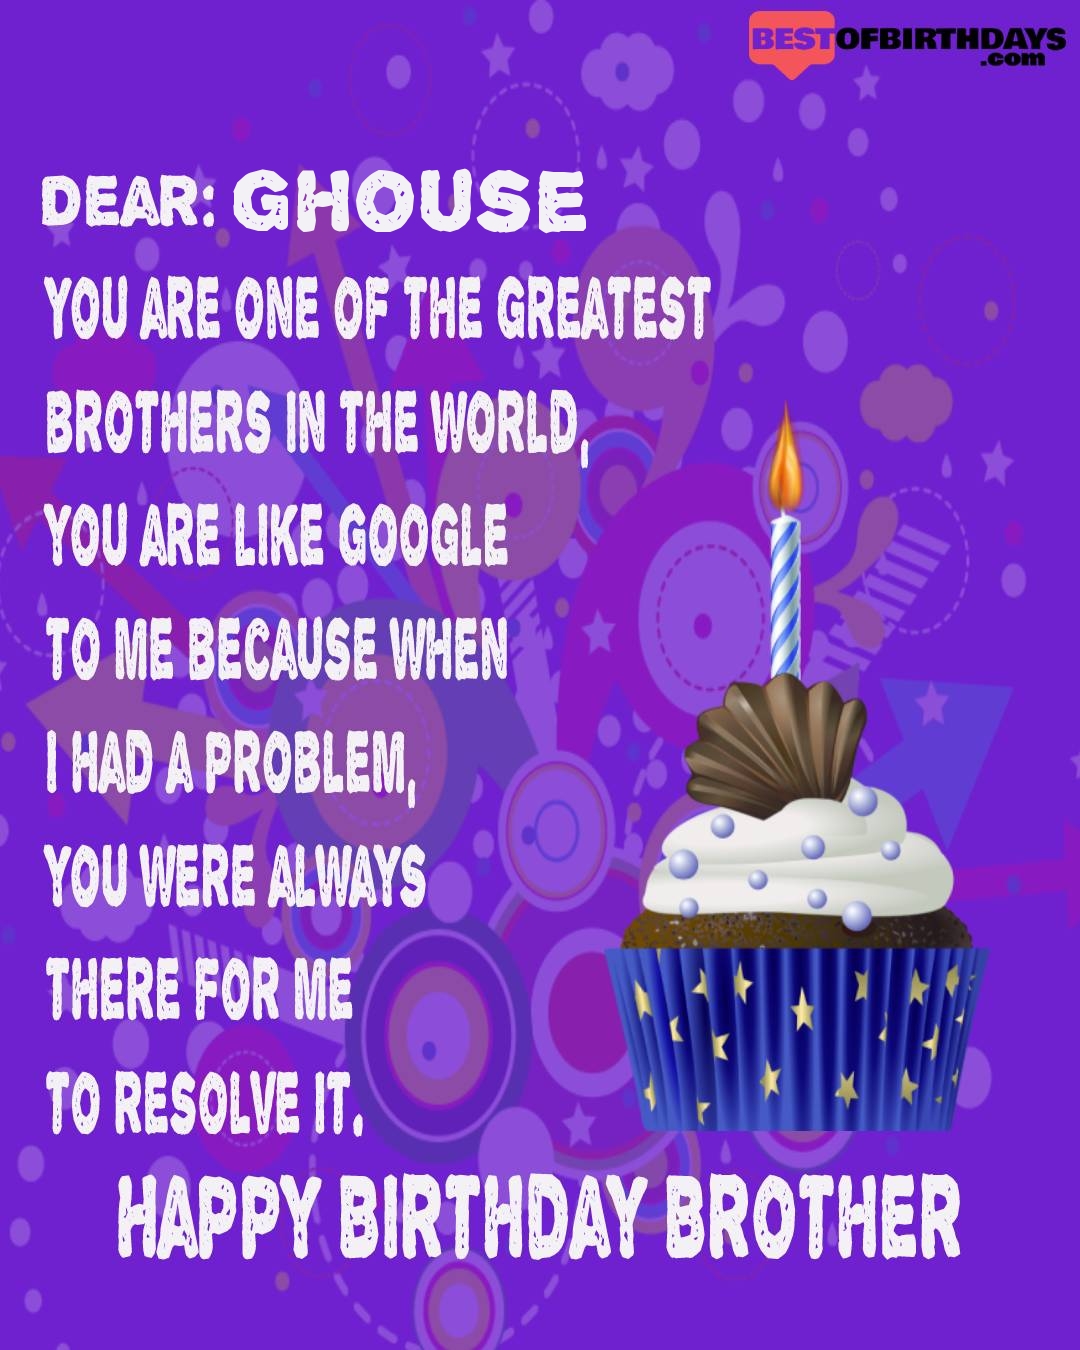 Happy birthday ghouse bhai brother bro